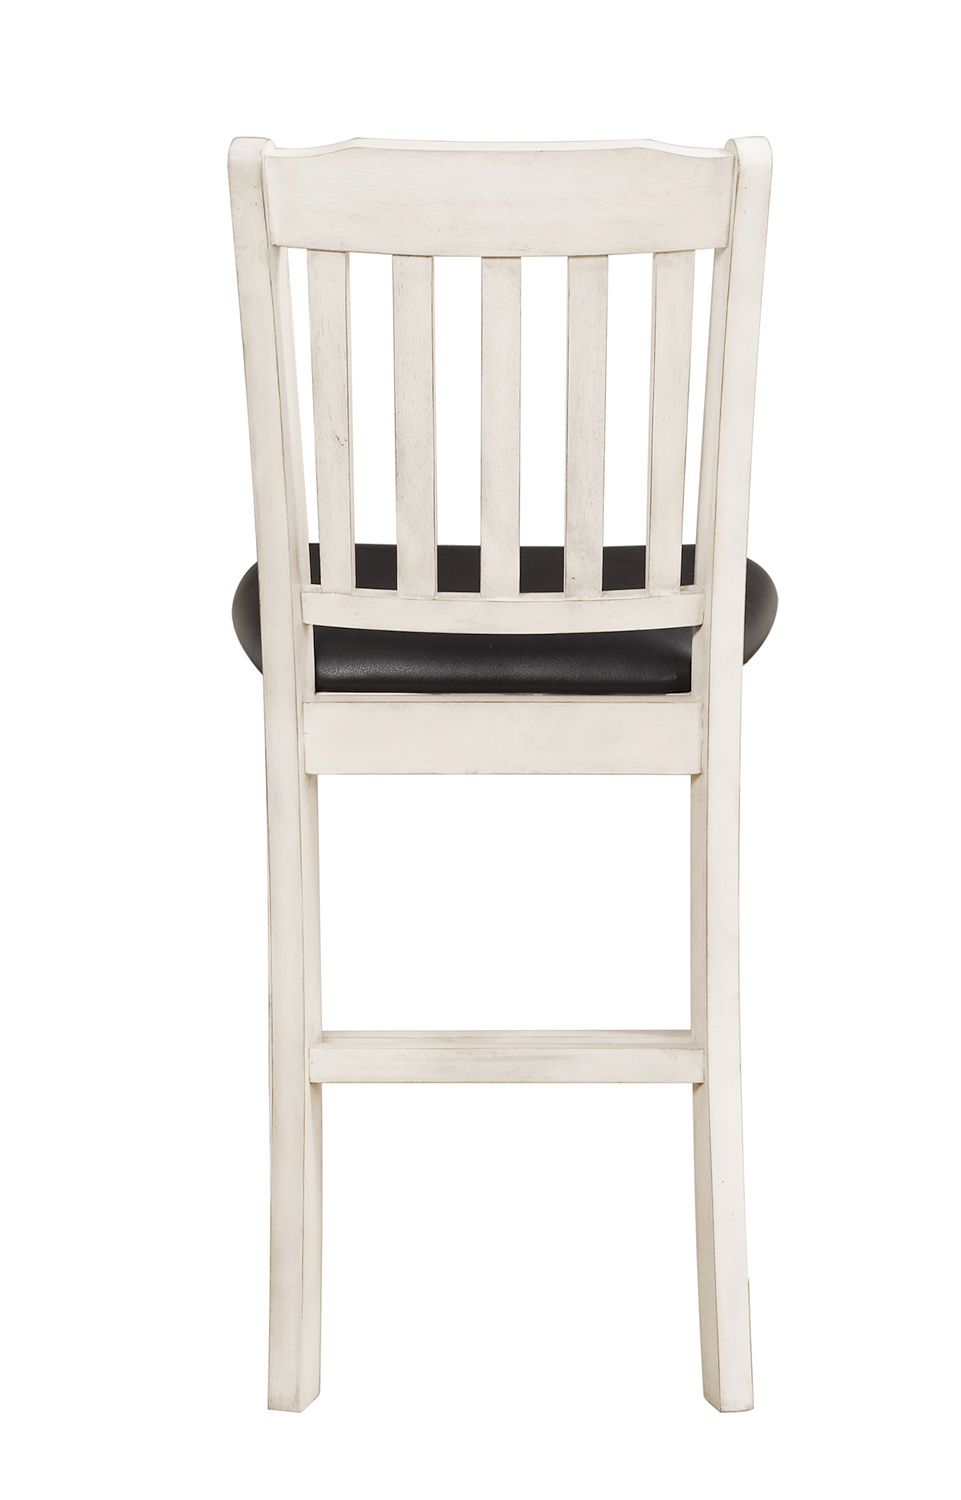 Homelegance Kiwi Counter Height Chair - White Wash